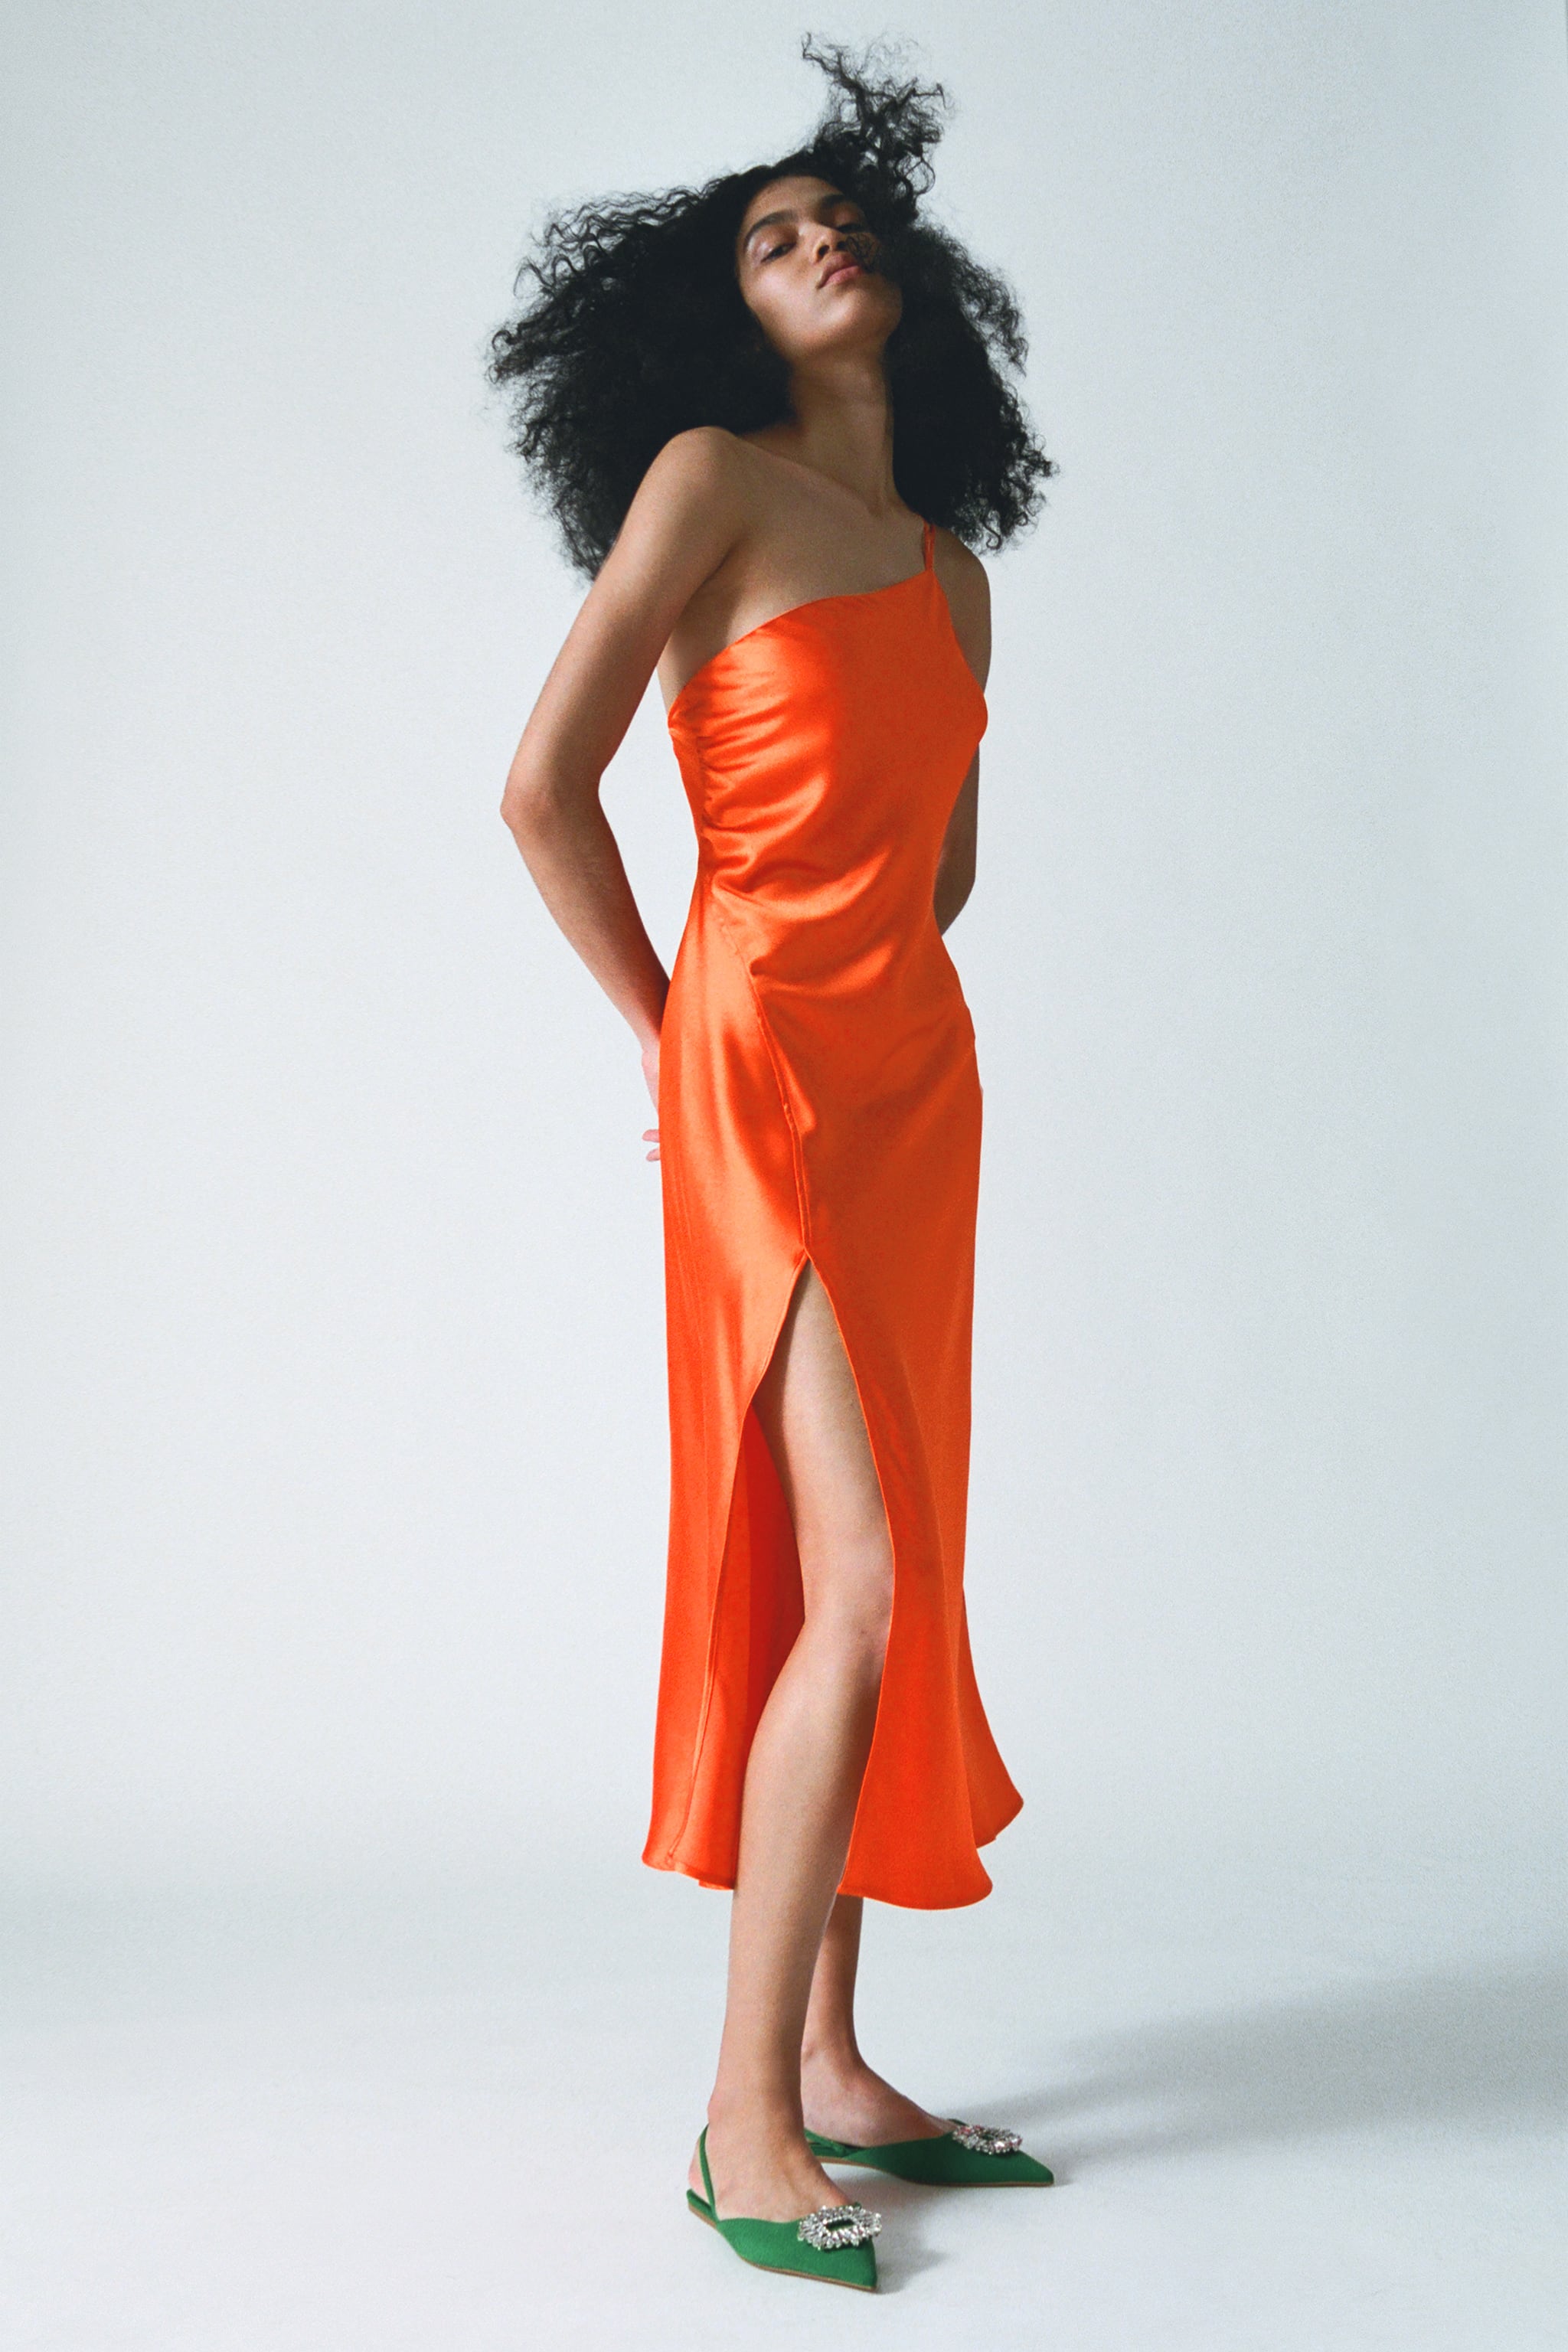 Raynara Negrine | Page 2 | the Fashion Spot